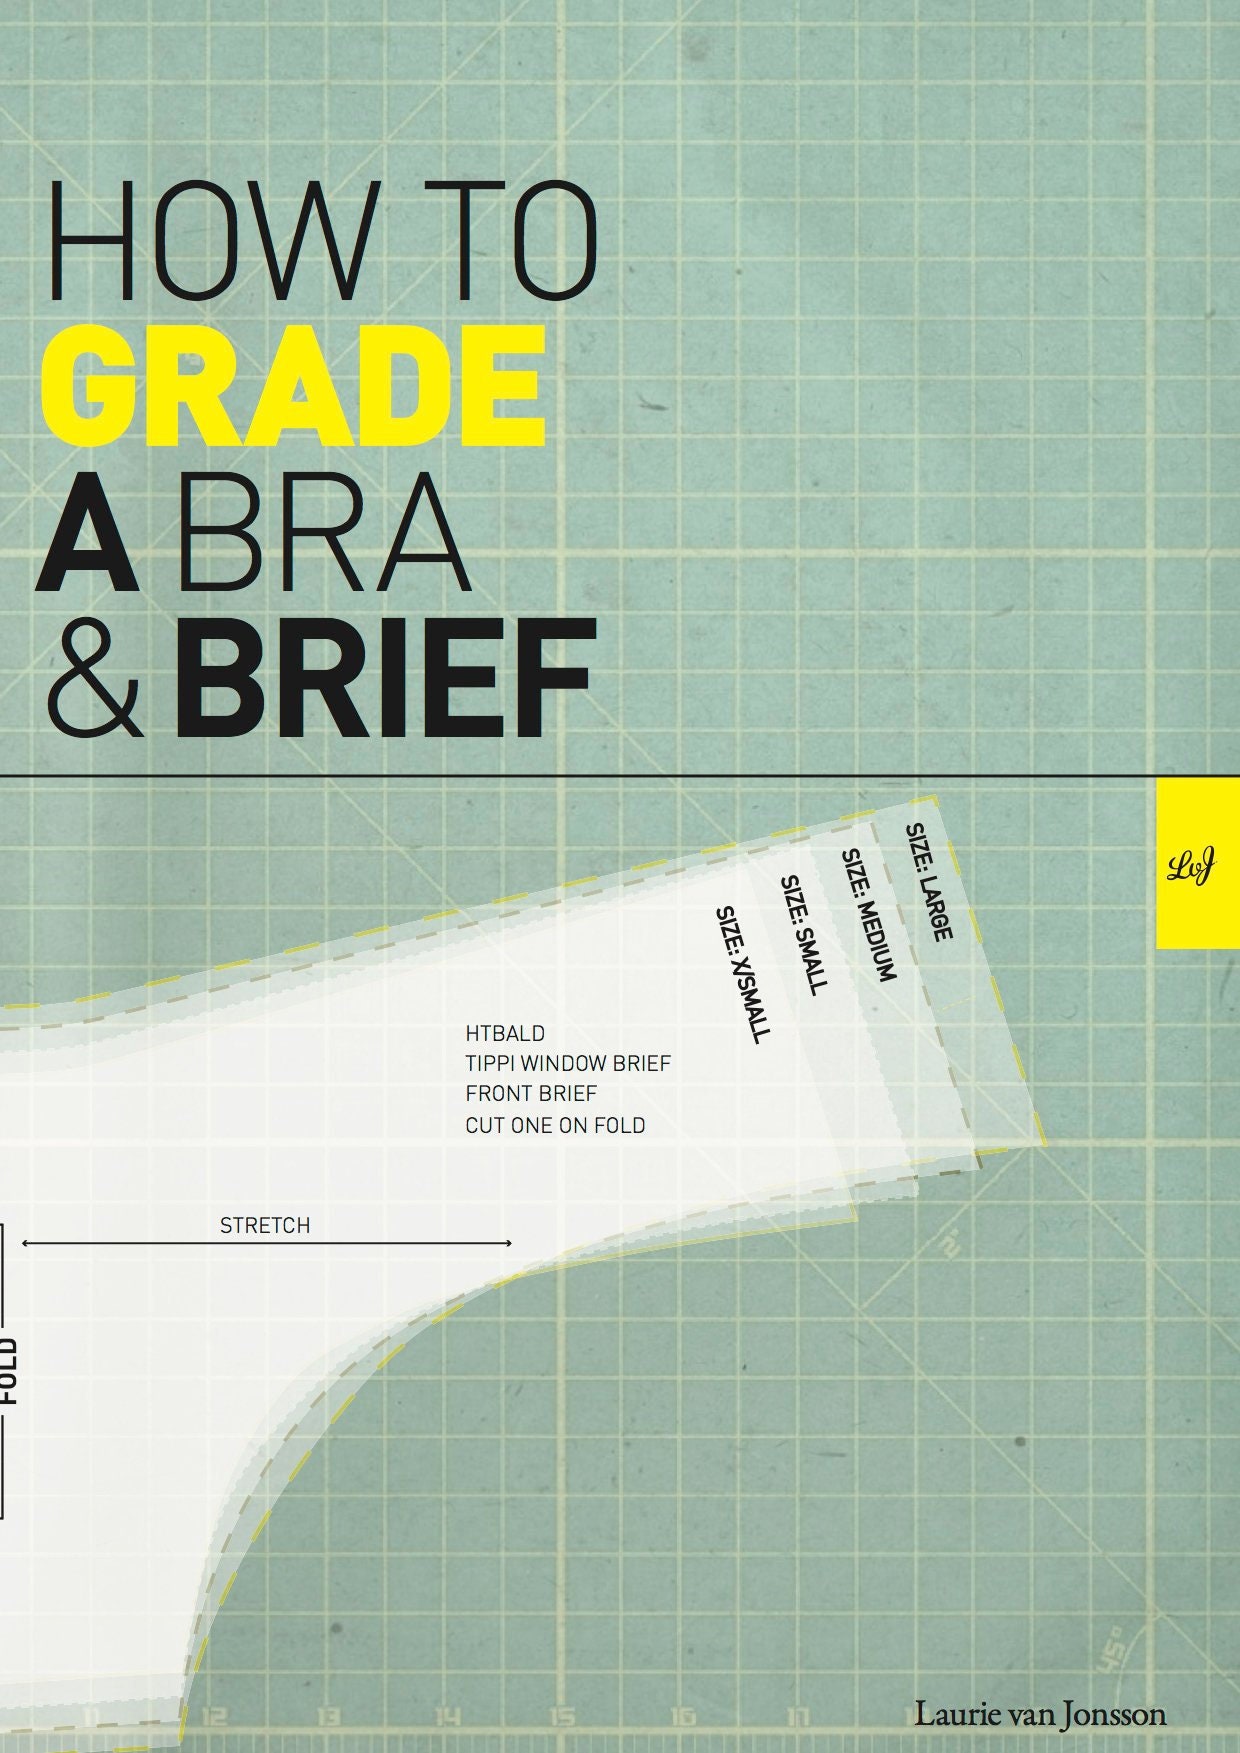 Grading a bra wing — Van Jonsson Design